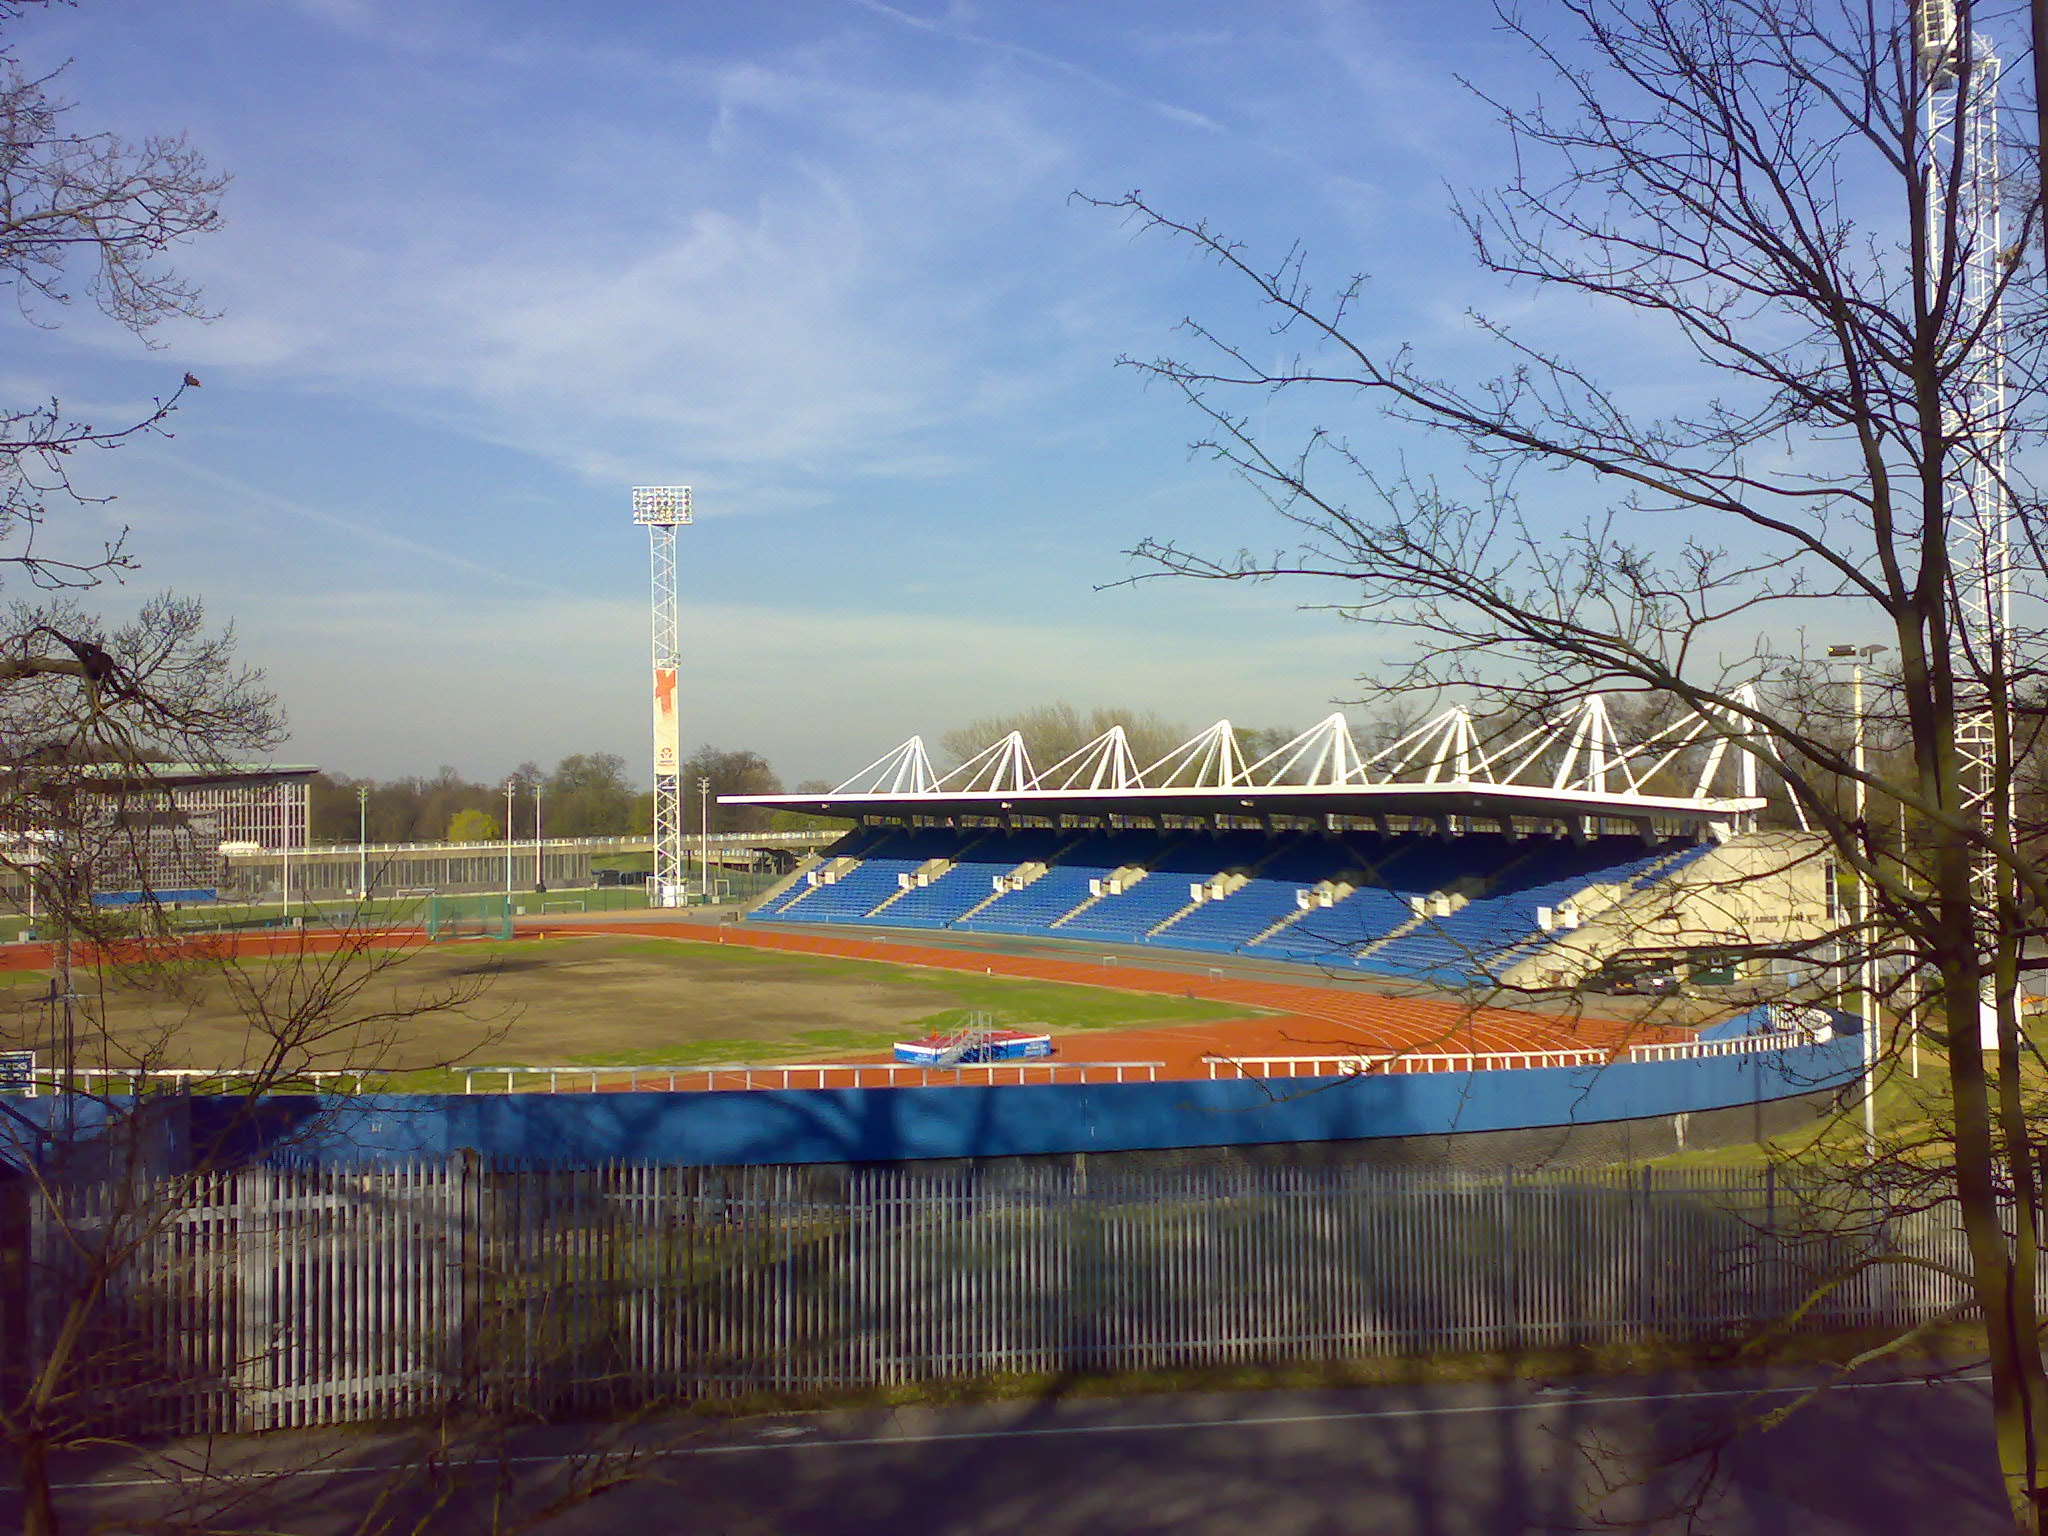 Crystal Palace National Sports Centre - Wikipedia